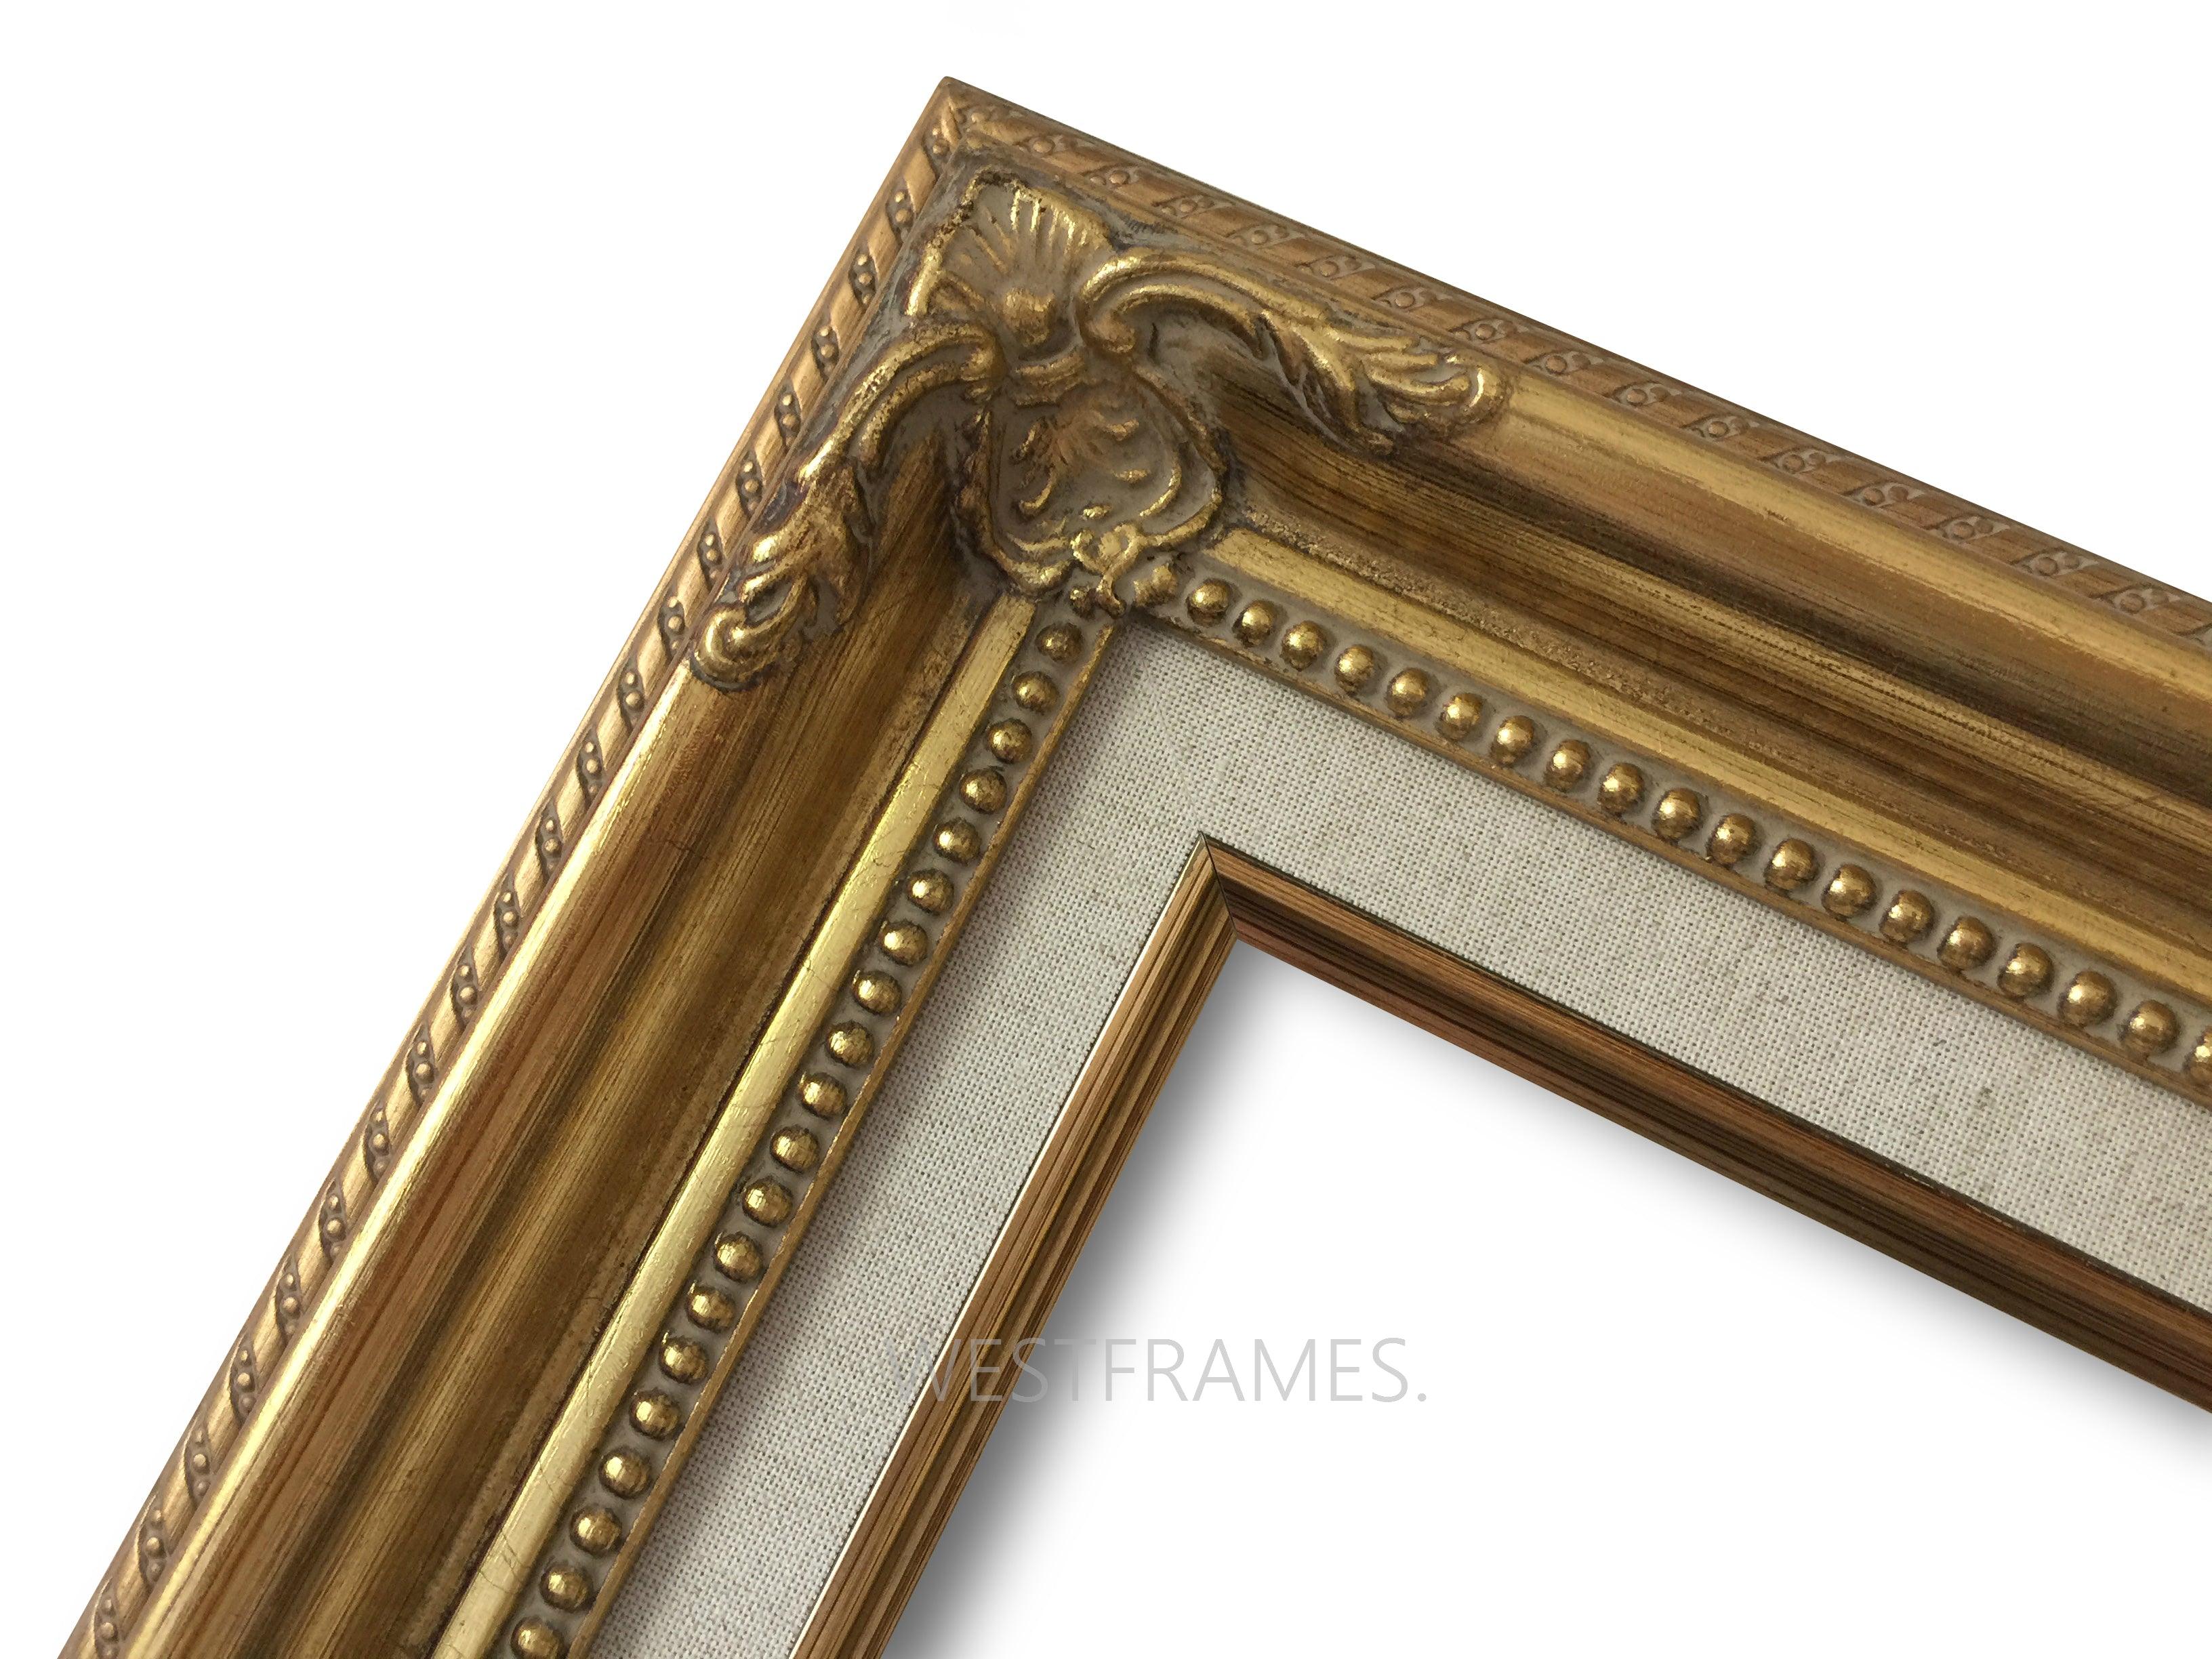 Gold Frames, Baroque Ornate Frame for Pictures, Art Print, Canvas